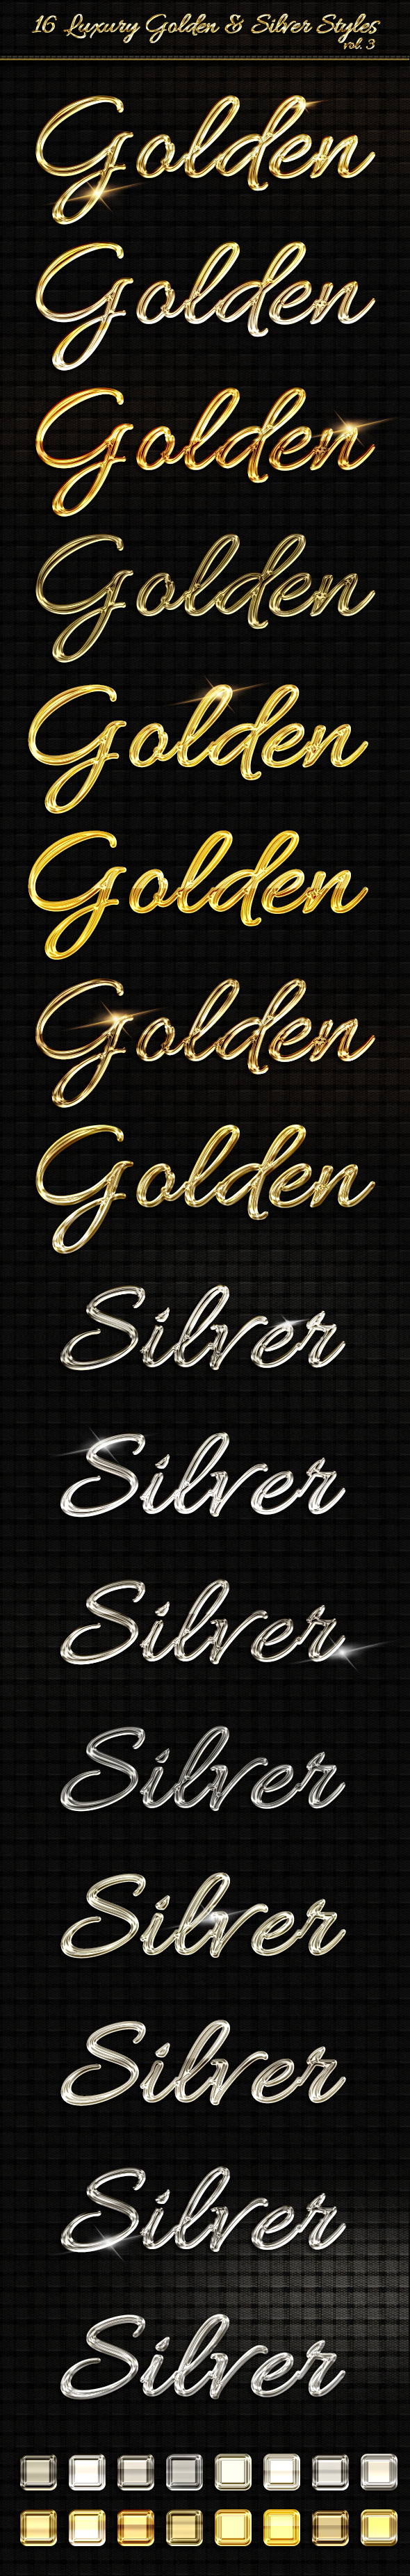 16 Luxury Golden & Silver Text Styles vol3